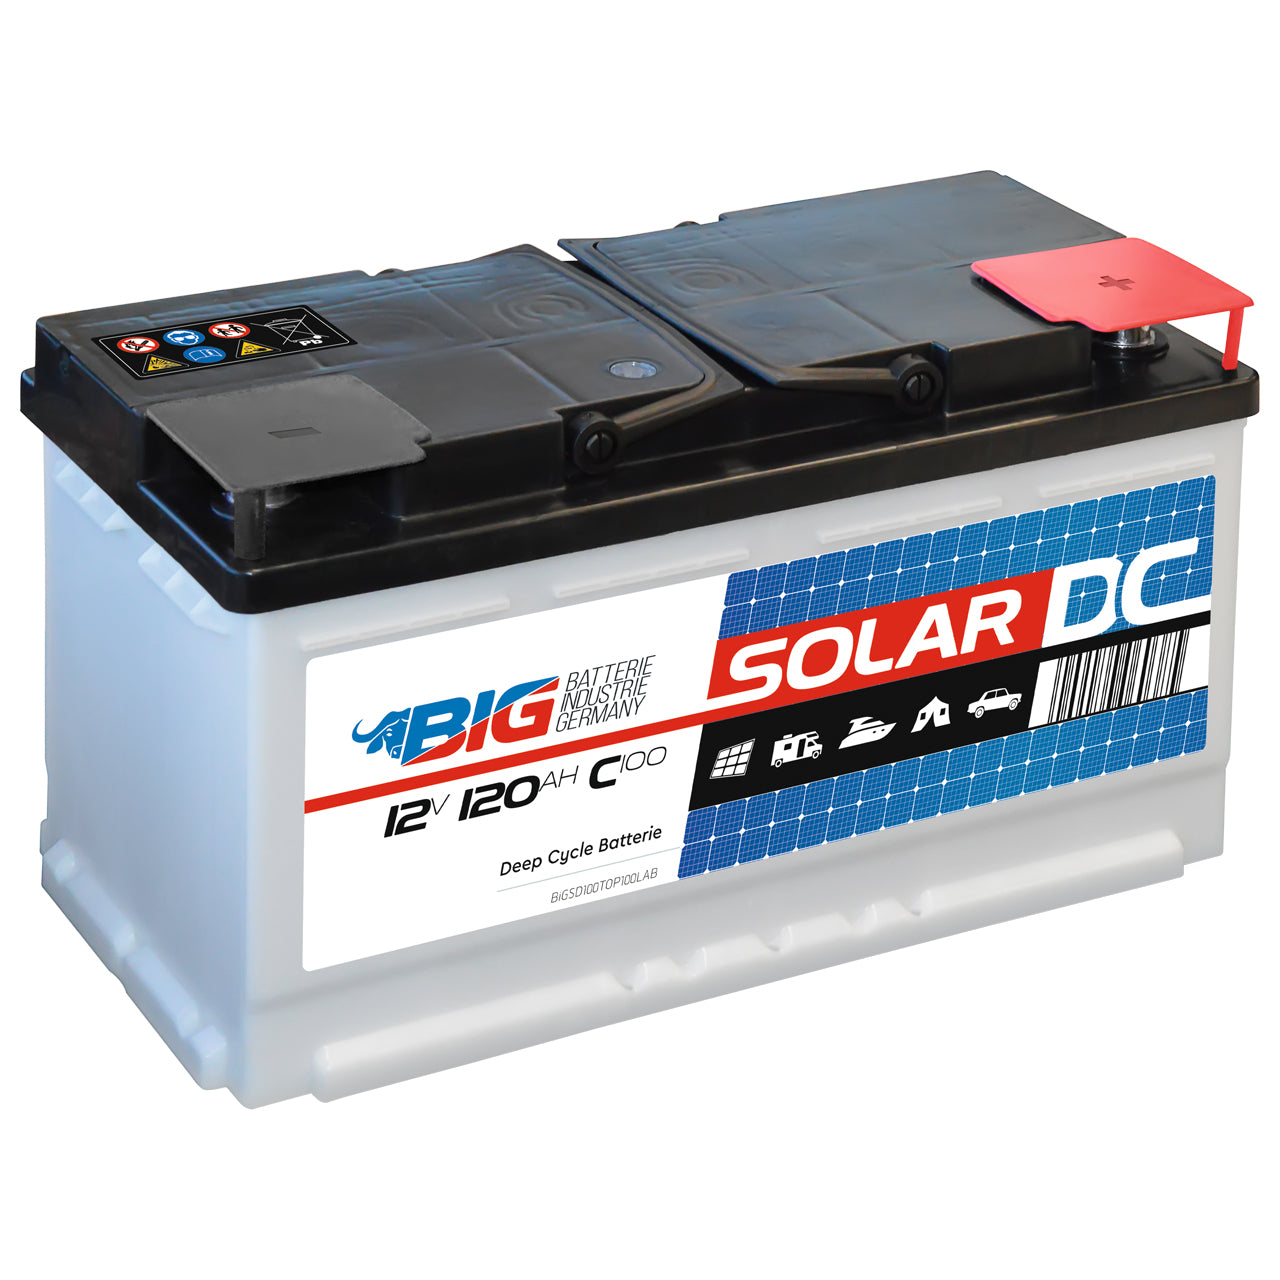 Langzeit Solarbatterie 170Ah 12V, 191,51 €